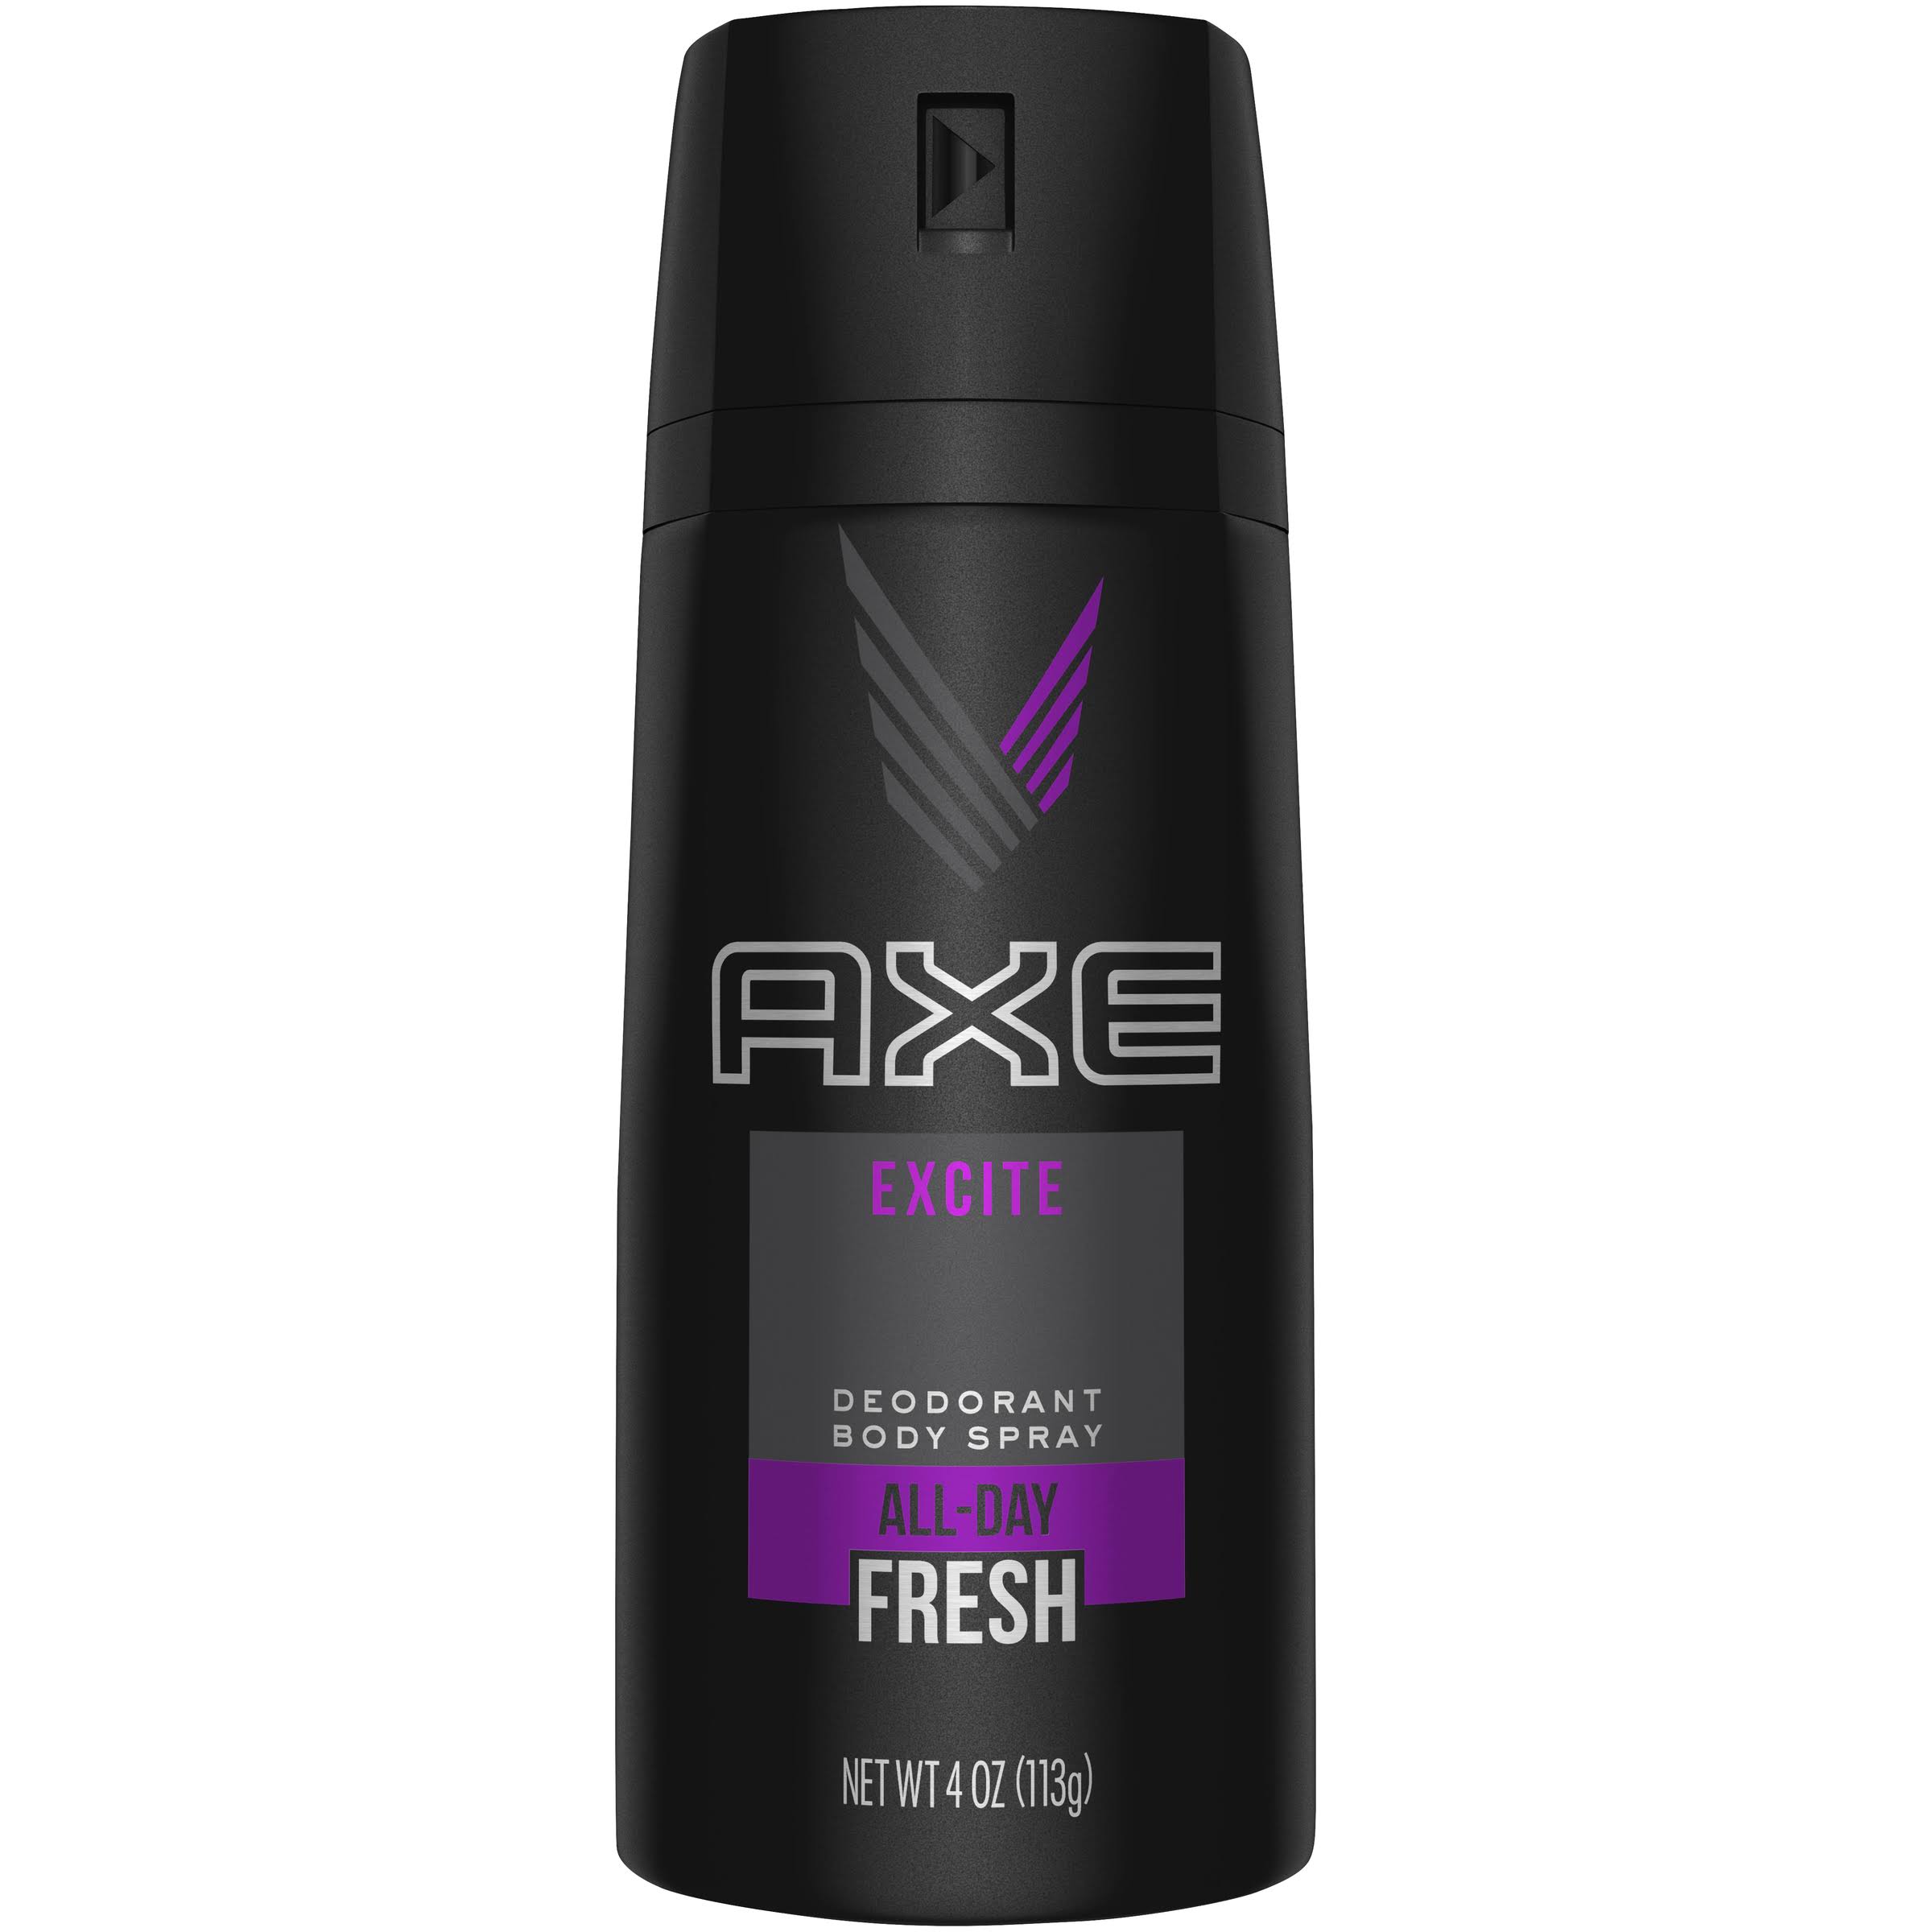 Axe Deodorant Body Spray - Excite, 4oz